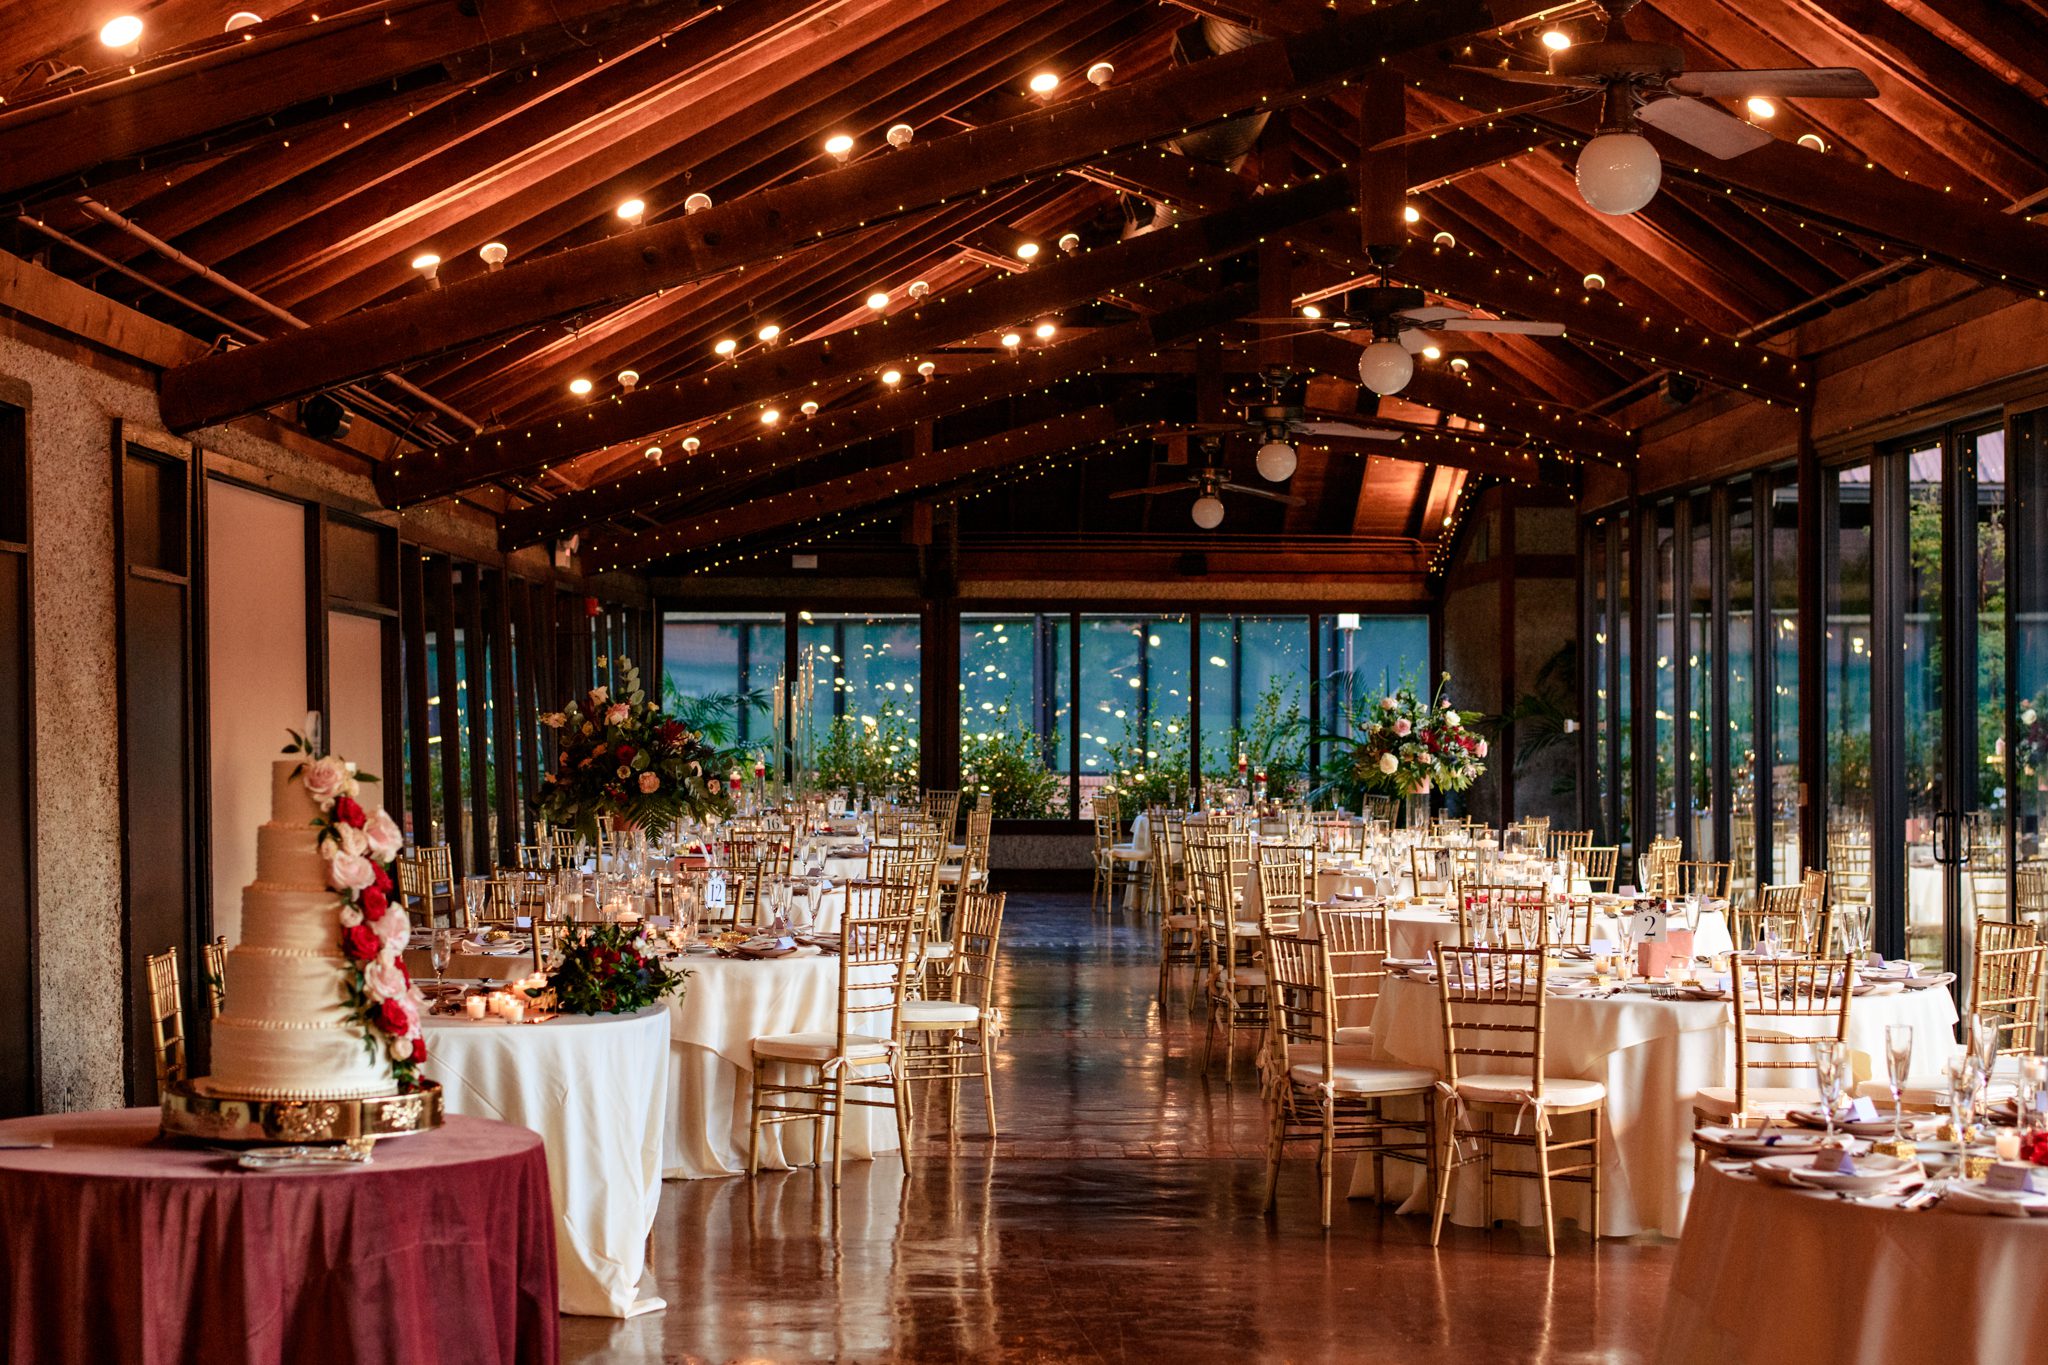 Exquisitely arranged Biltmore wedding reception venue in Deerpark, highlighting lavish decor and a grand chandelier centerpiece